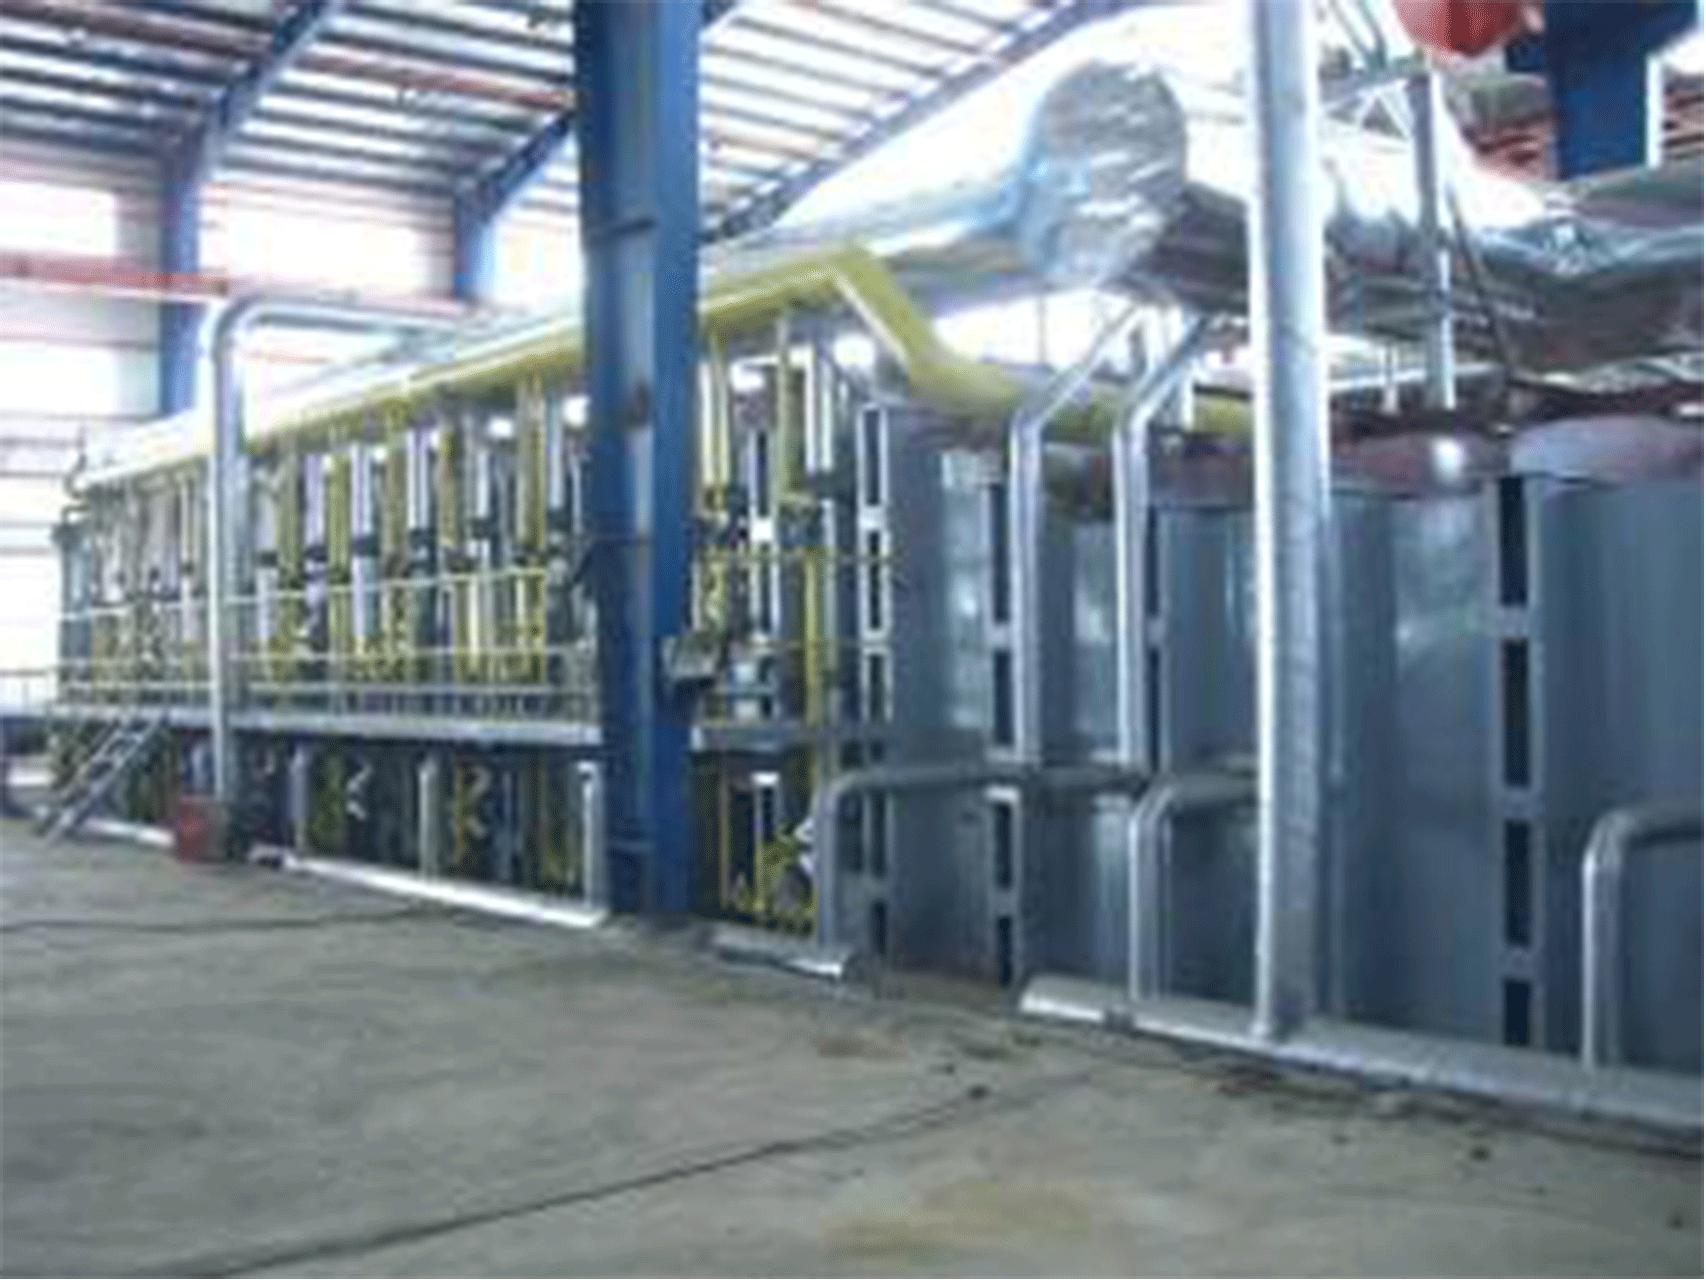 regenerative gas fired annealing furnace